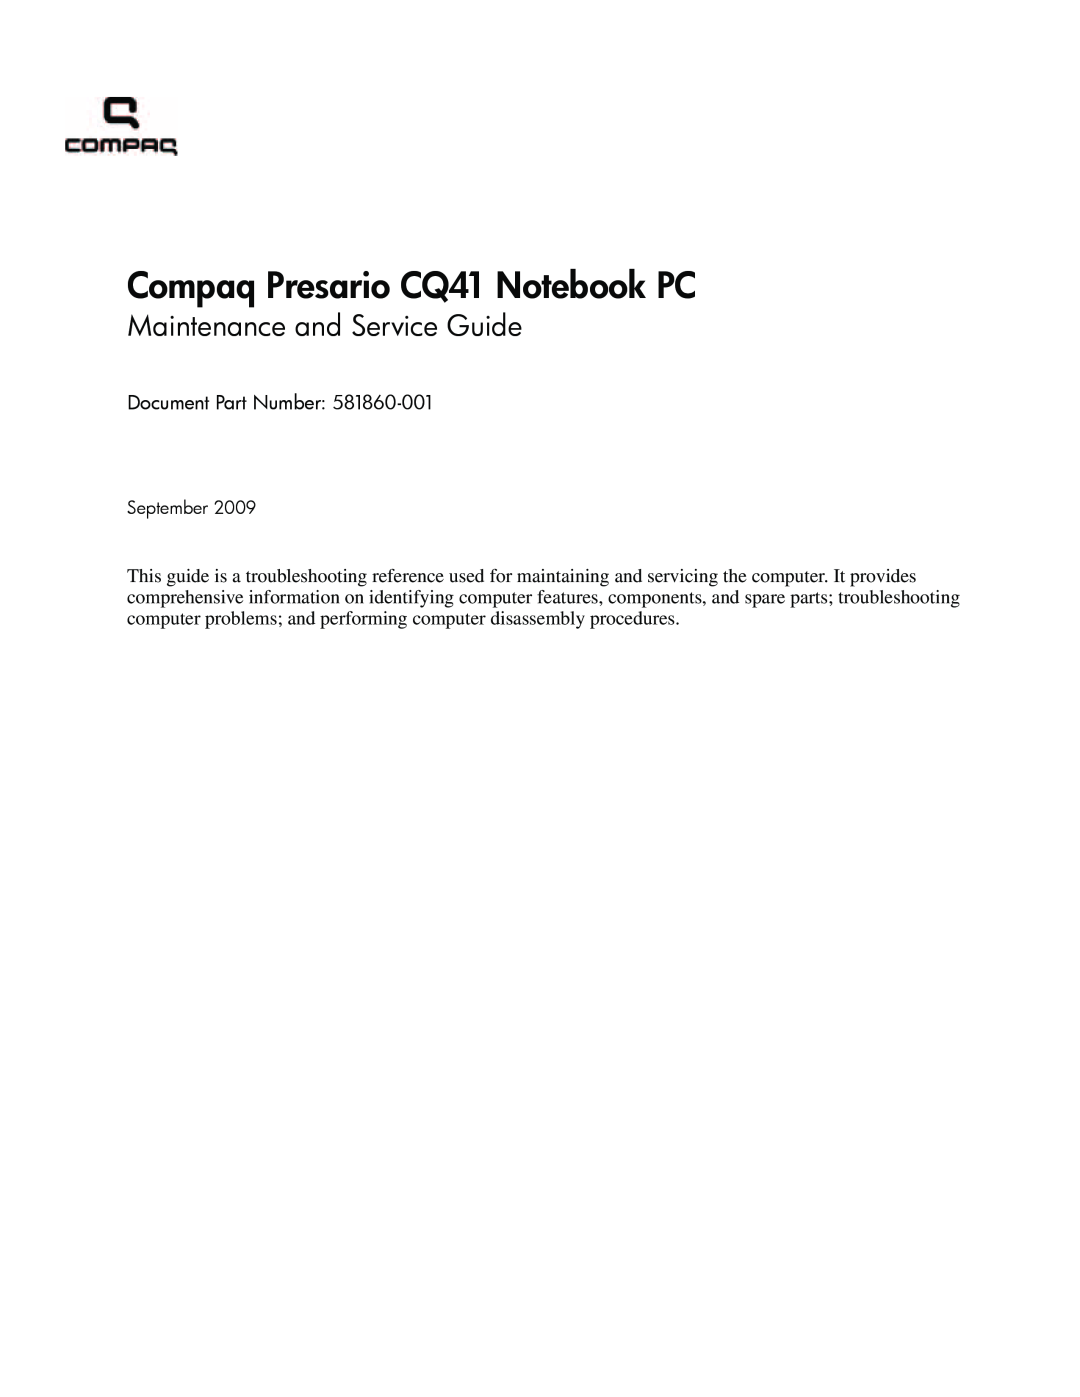 HP CQ41-205AX, CQ41-206AU manual Compaq Presario CQ41 Notebook PC, Maintenance and Service Guide, Document Part Number 